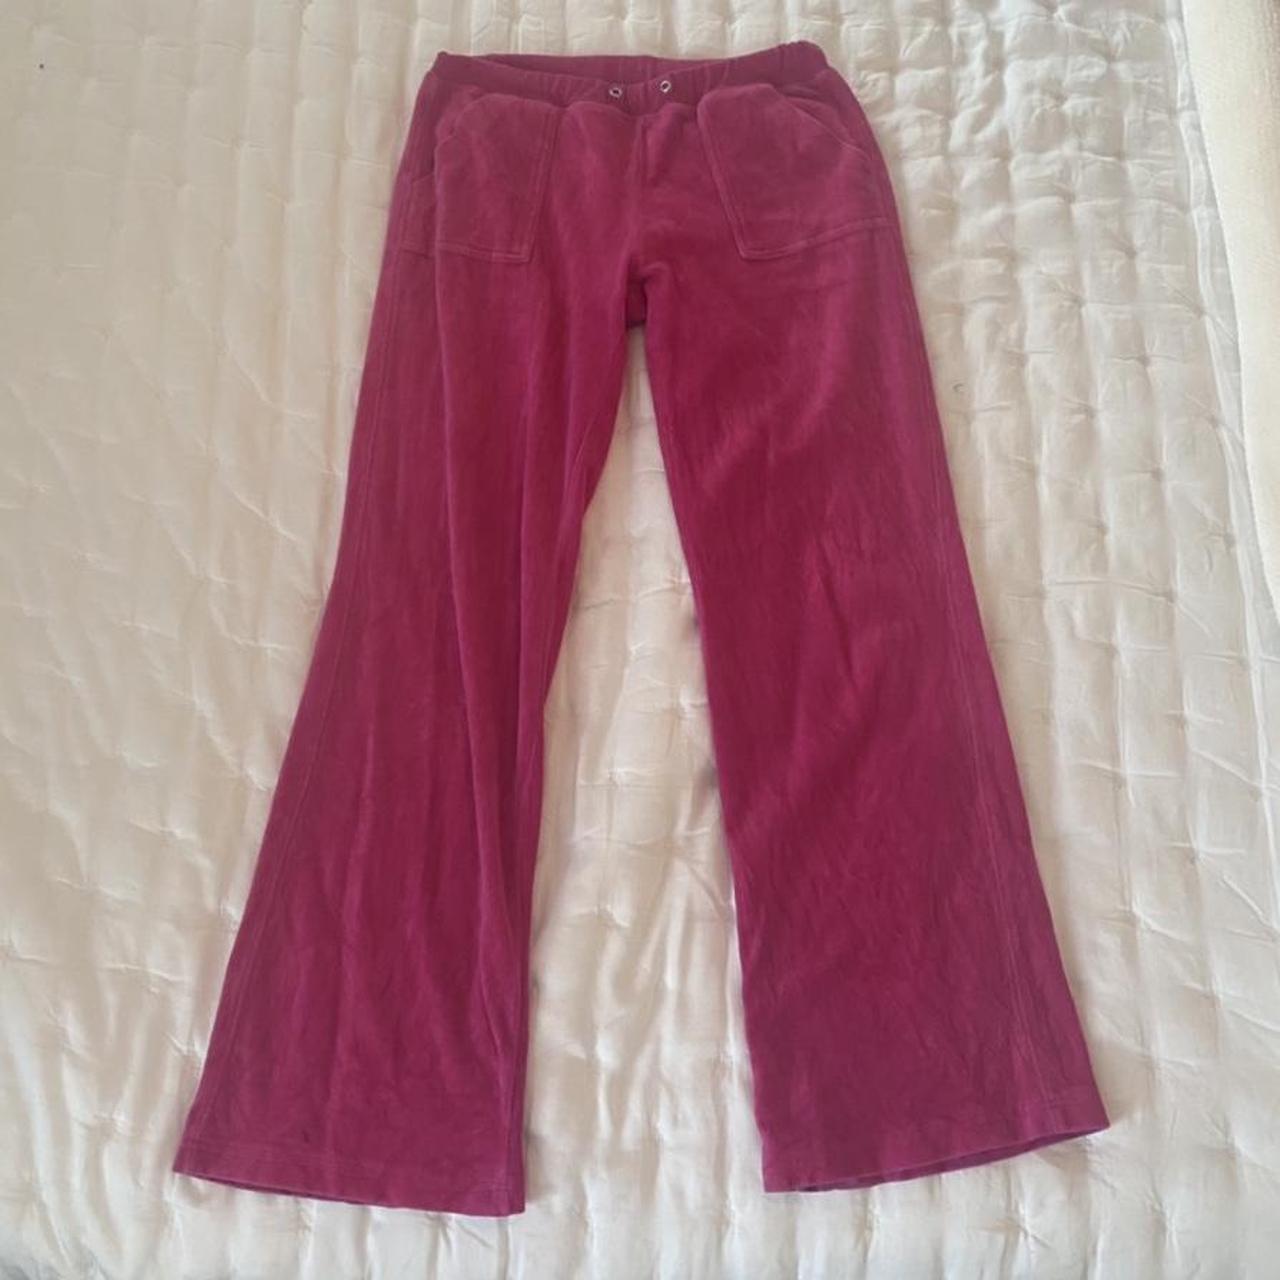 Vintage hot pink low rise pants. Color is def a... - Depop